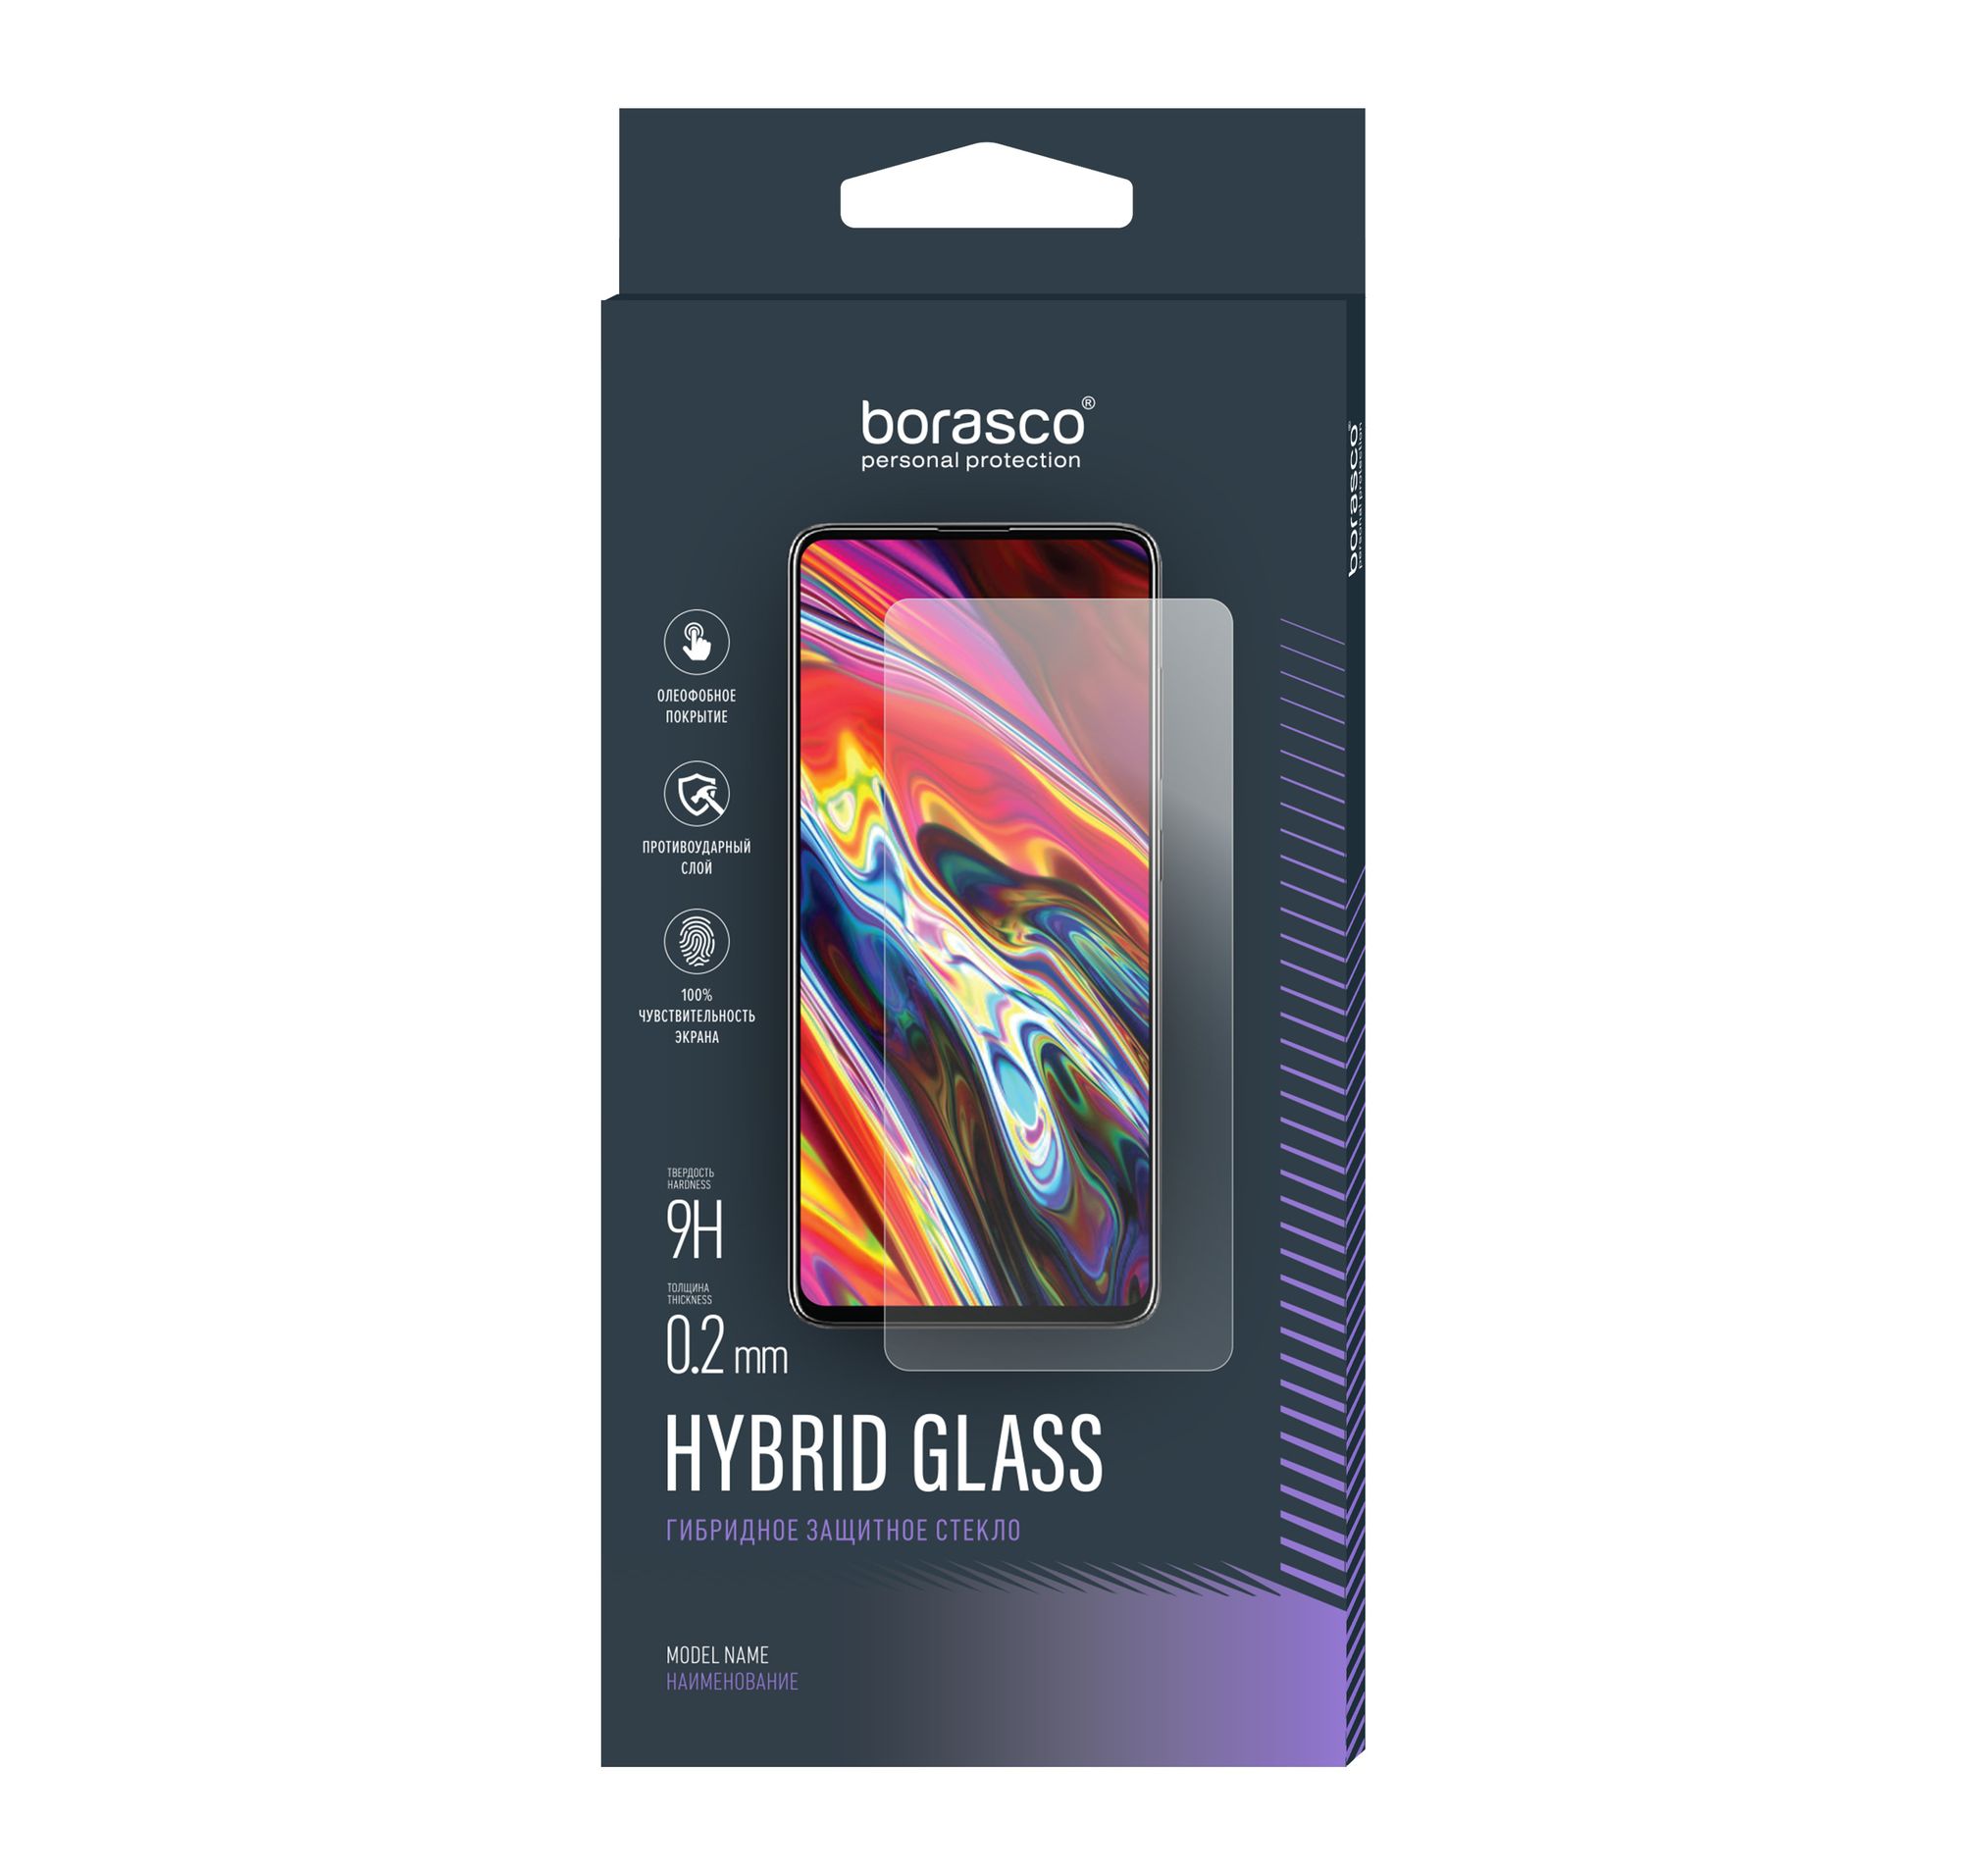 Стекло защитное Hybrid Glass VSP 0,26 мм для ASUS Zenfone Go ZB500KL/ZB500KG стекло защитное hybrid glass vsp 0 26 мм для asus zenfone 4 max m1 zb555kl